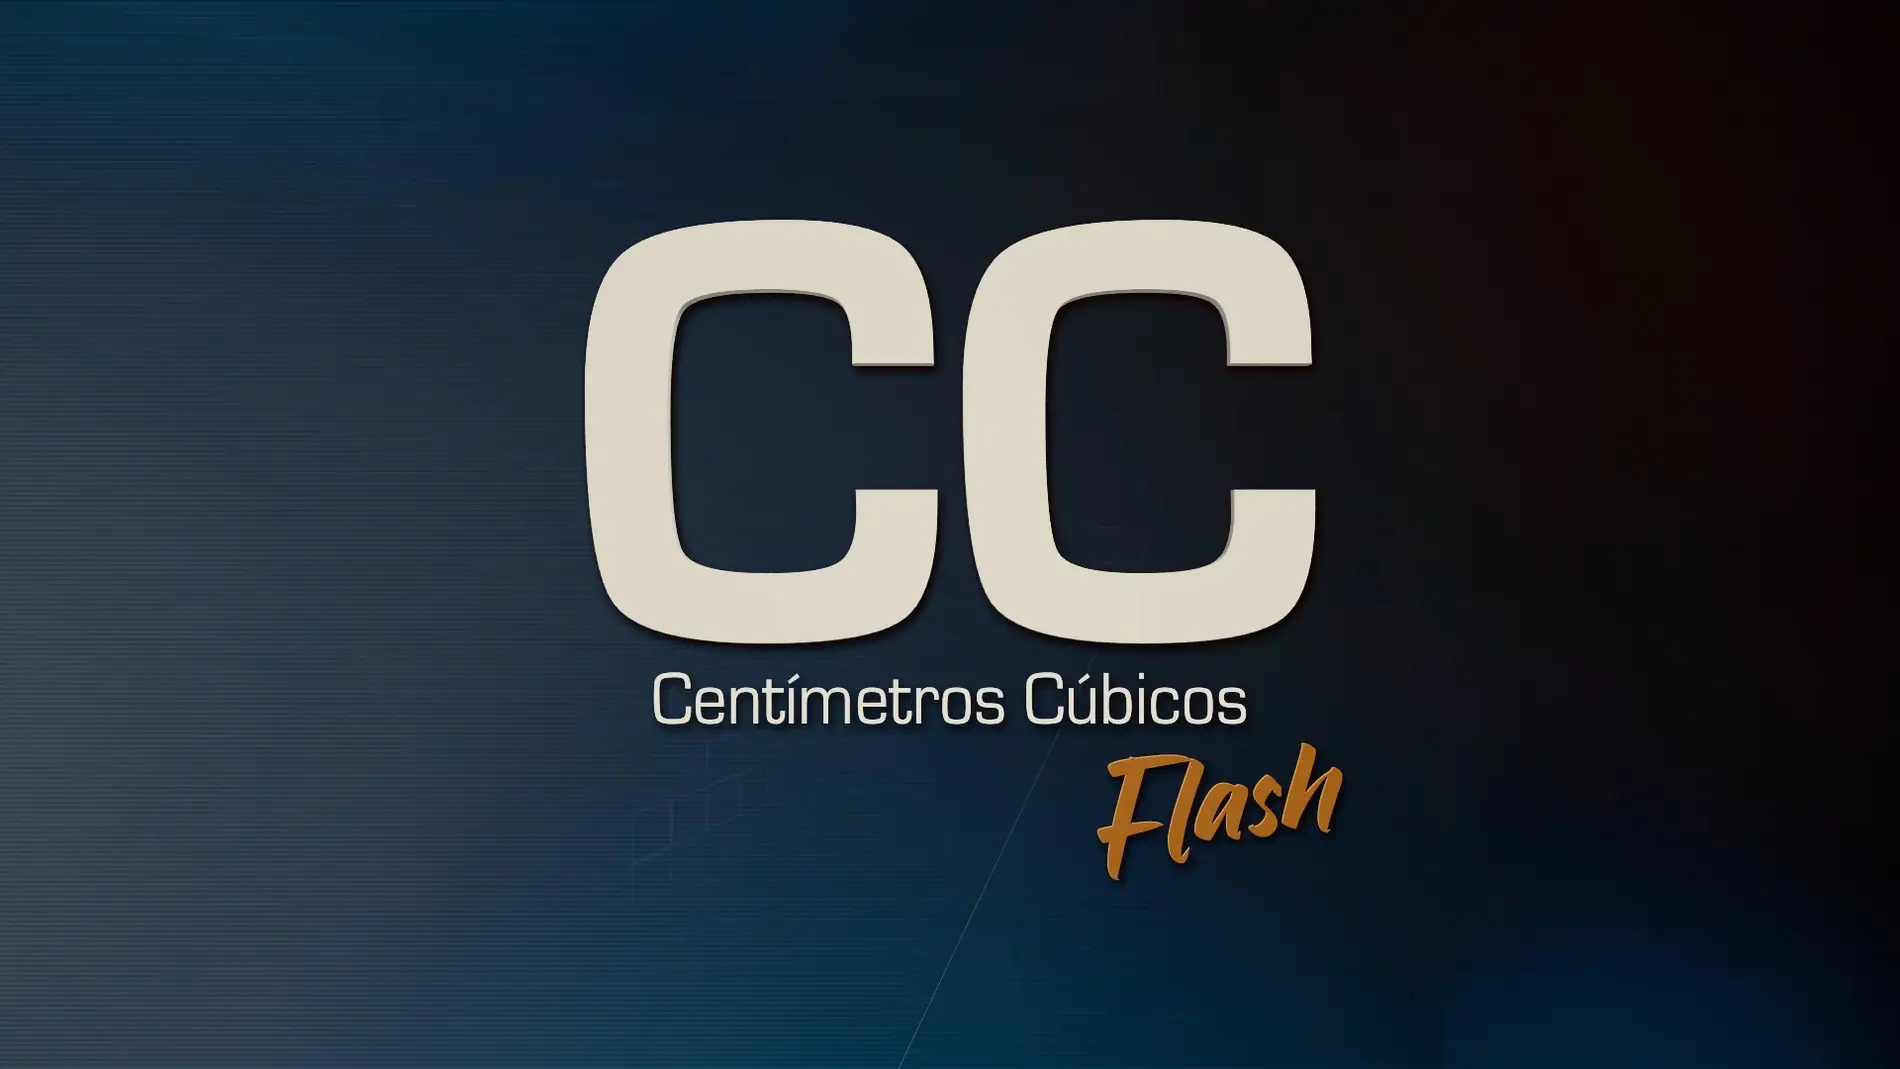 CC Flash 